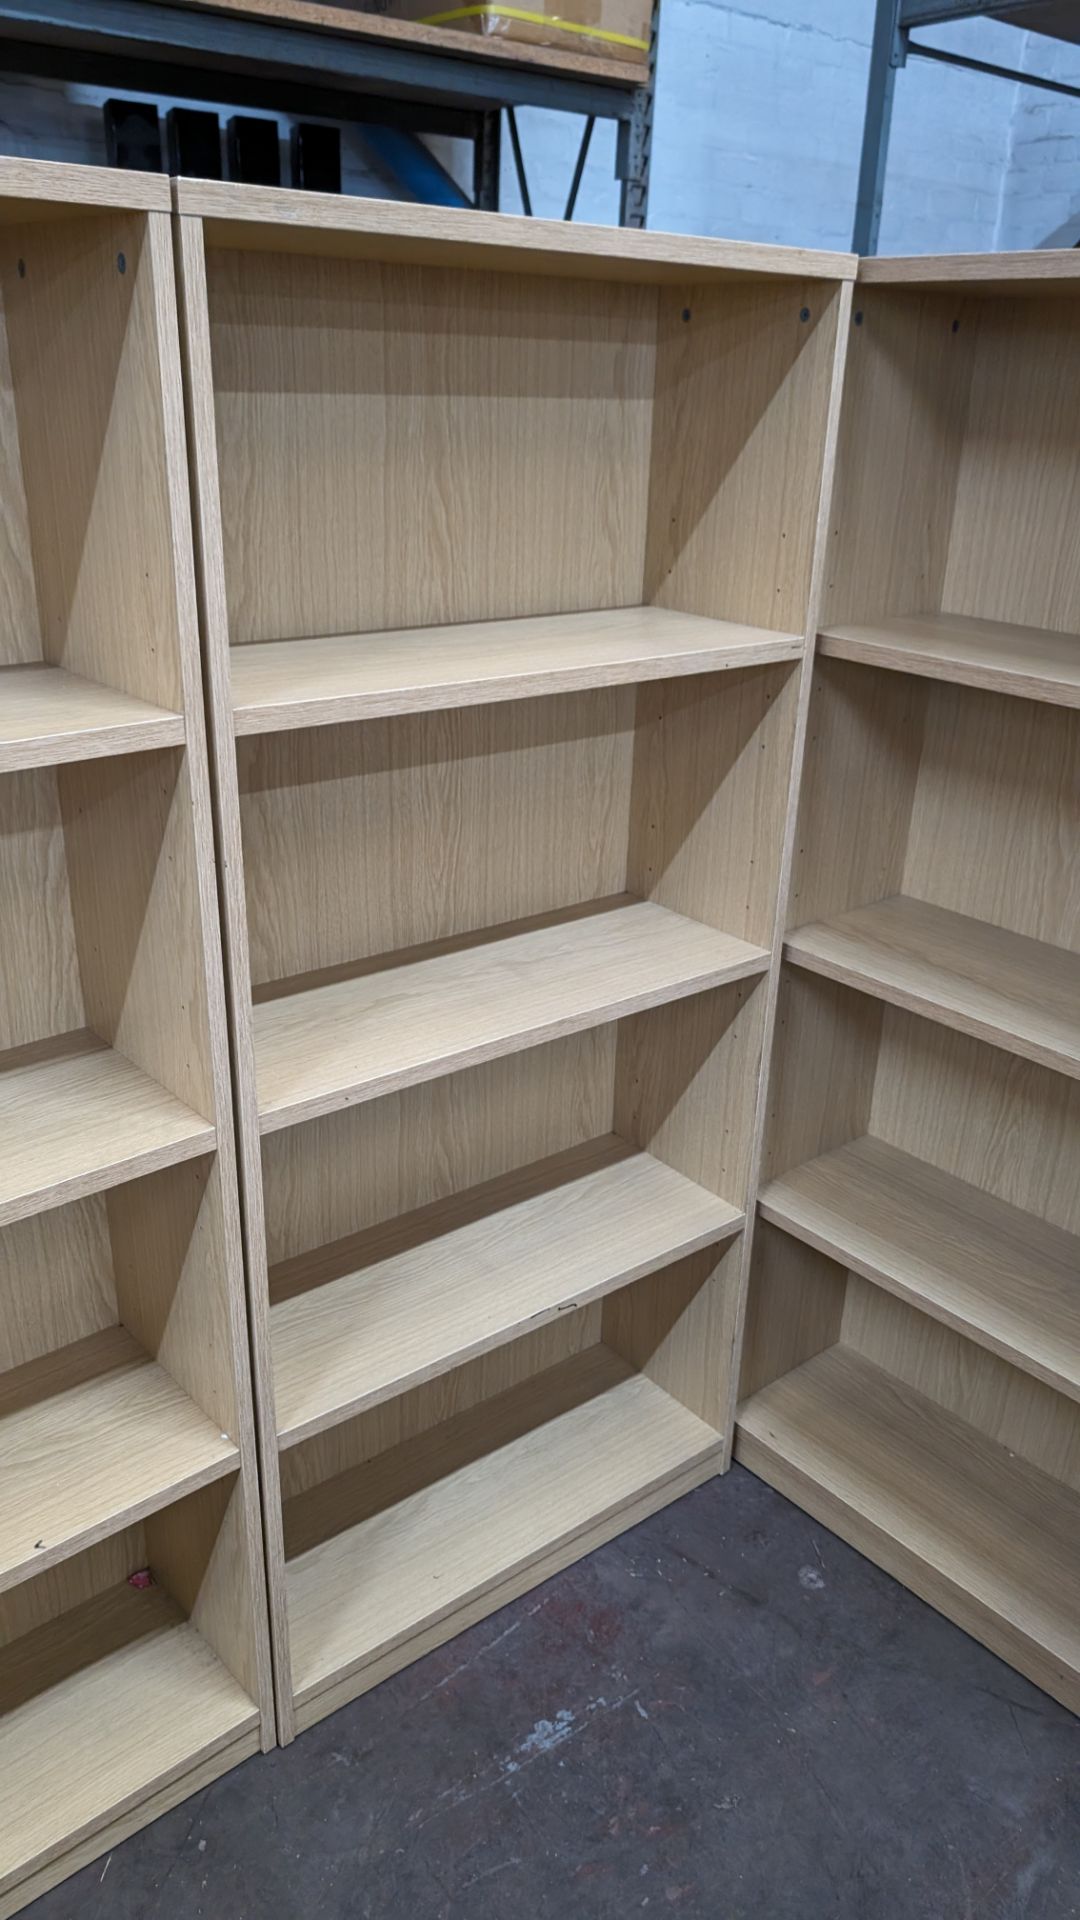 3 off bookcases each measuring 171cm x 80cm x 32cm - Image 4 of 5